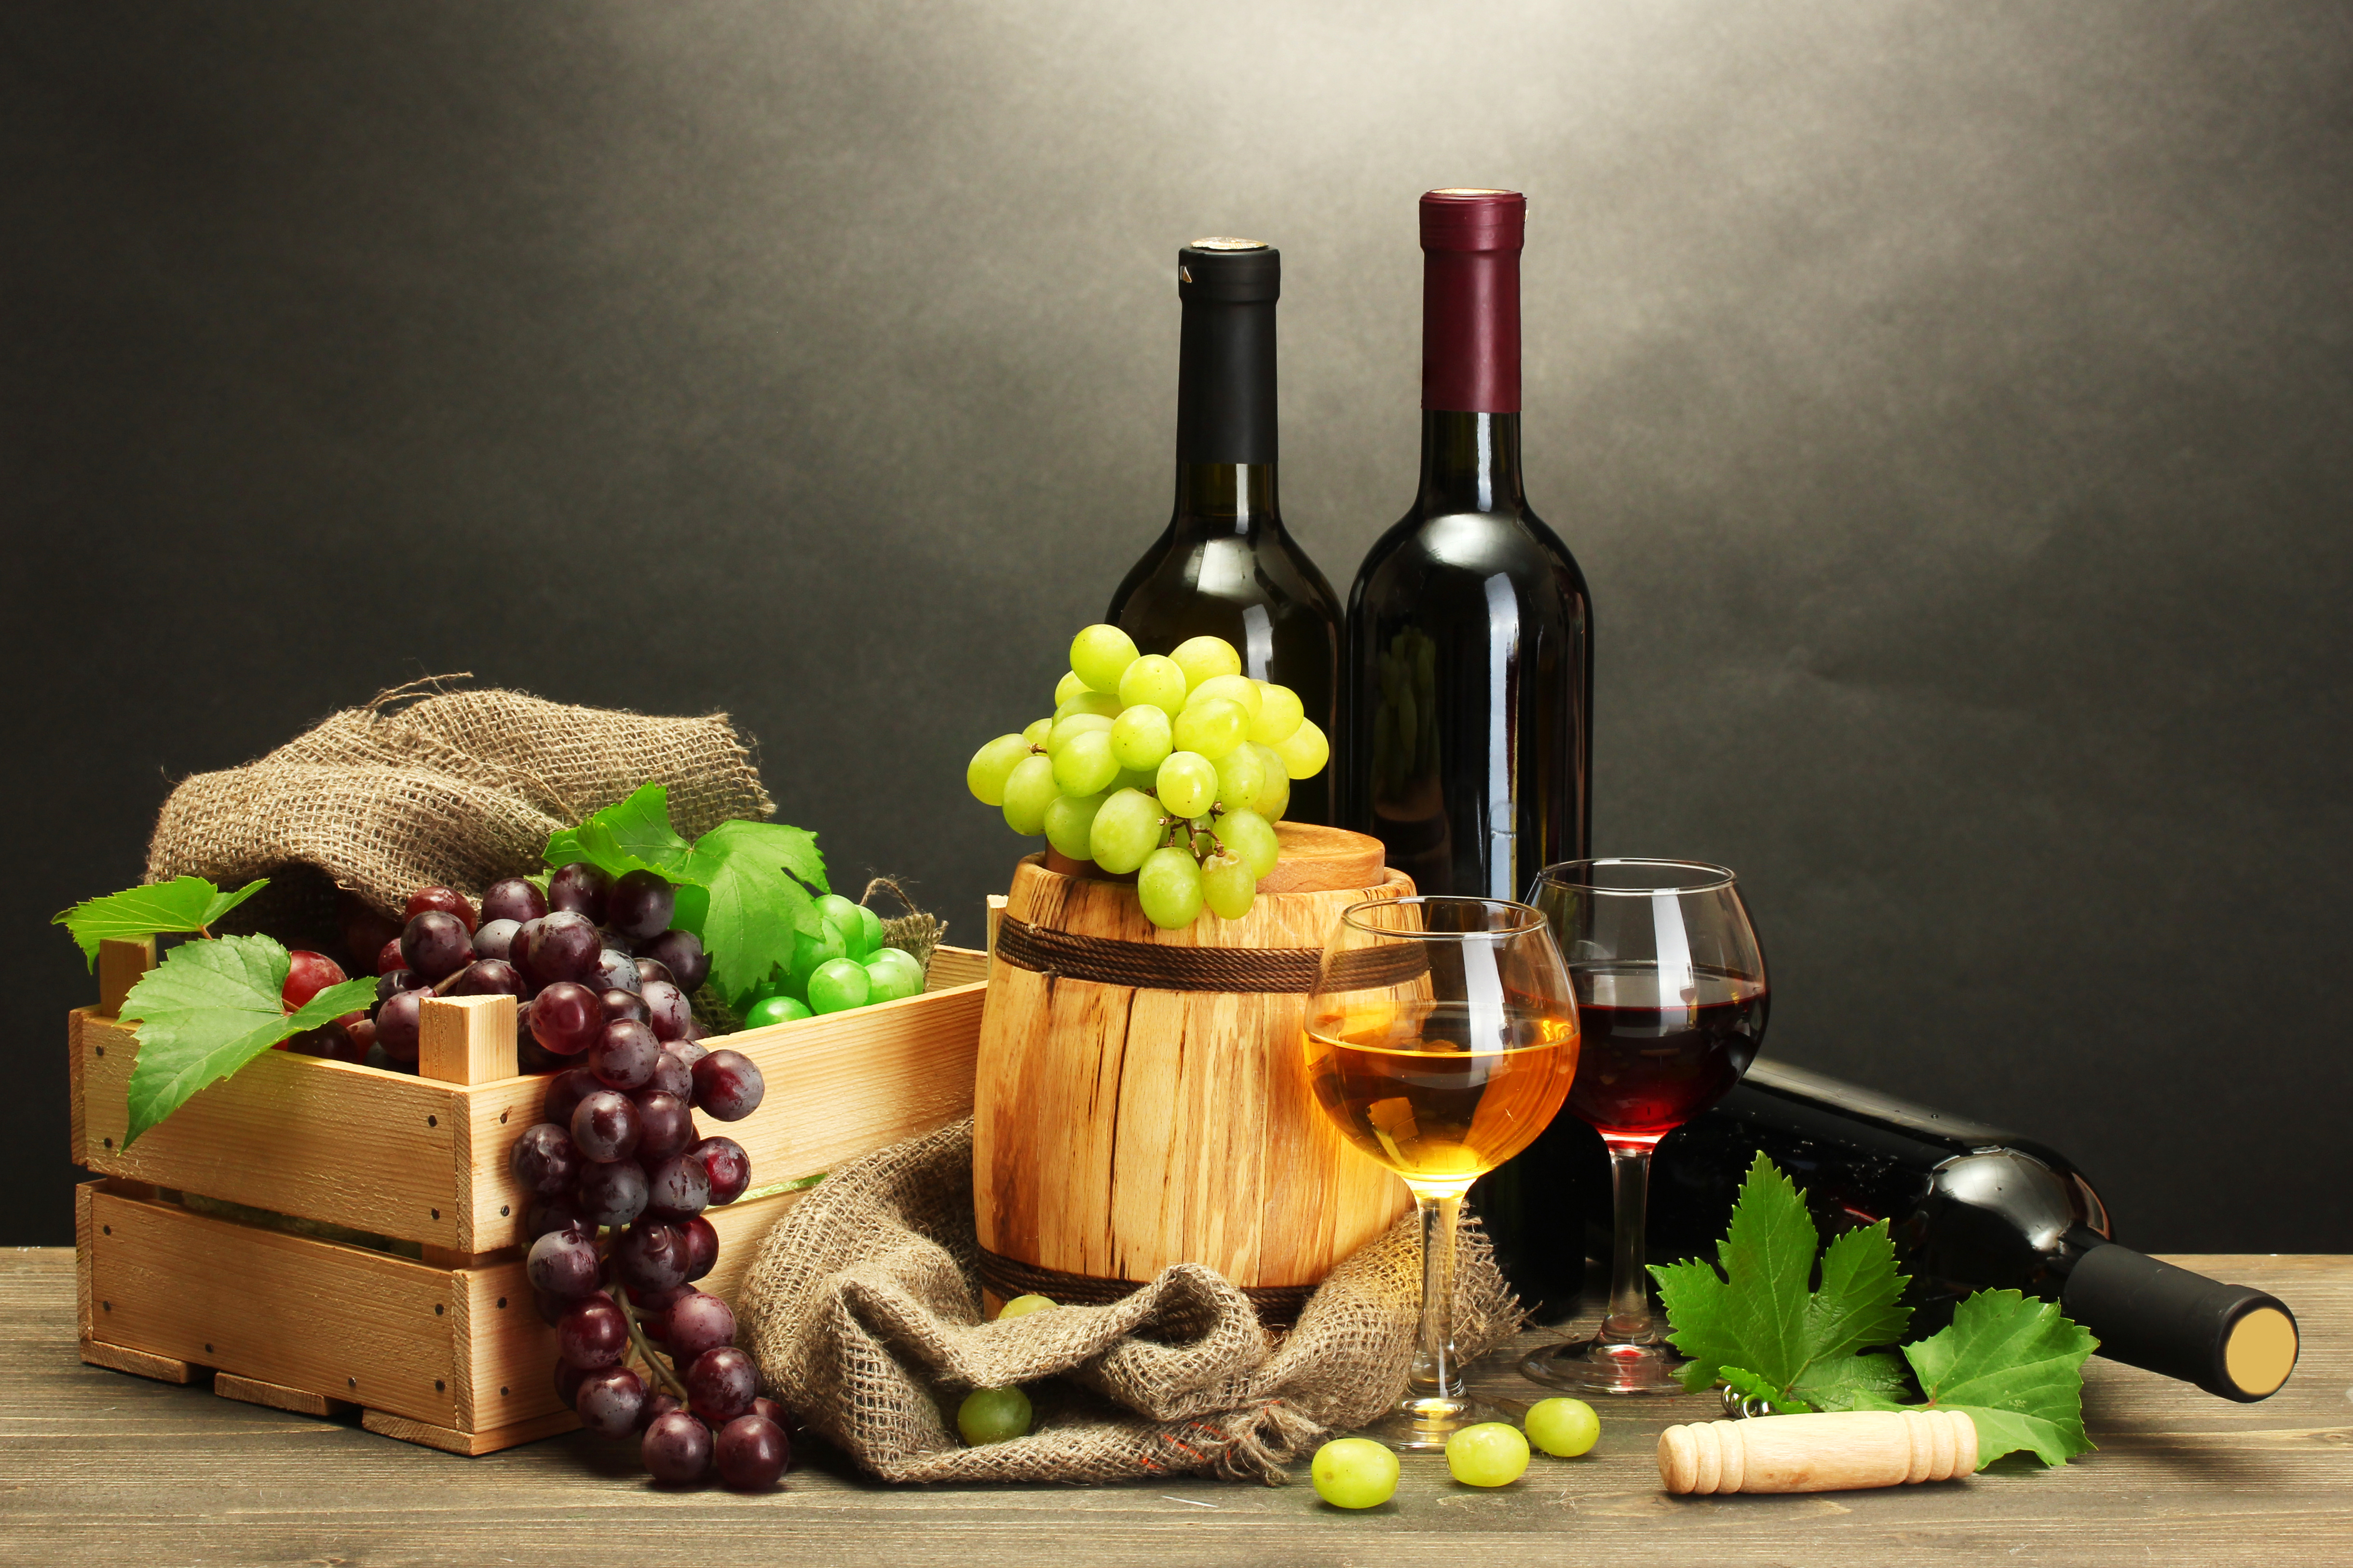 General 4879x3252 wine drink food alcohol grapes fruit still life bottles wood simple background